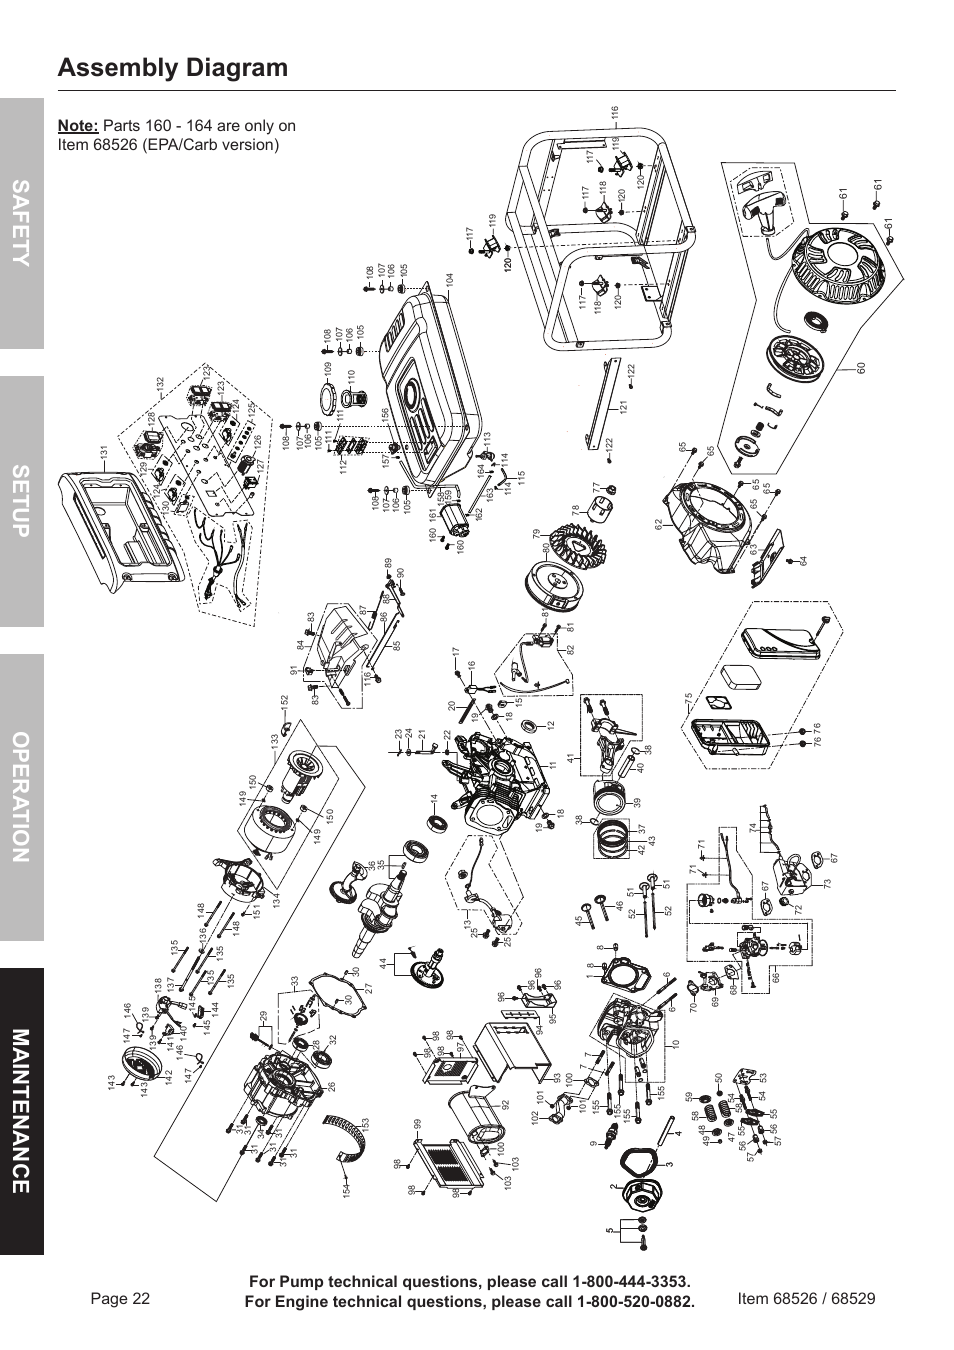 Assembly diagram, Safety o pera tion m aintenance setup | Harbor